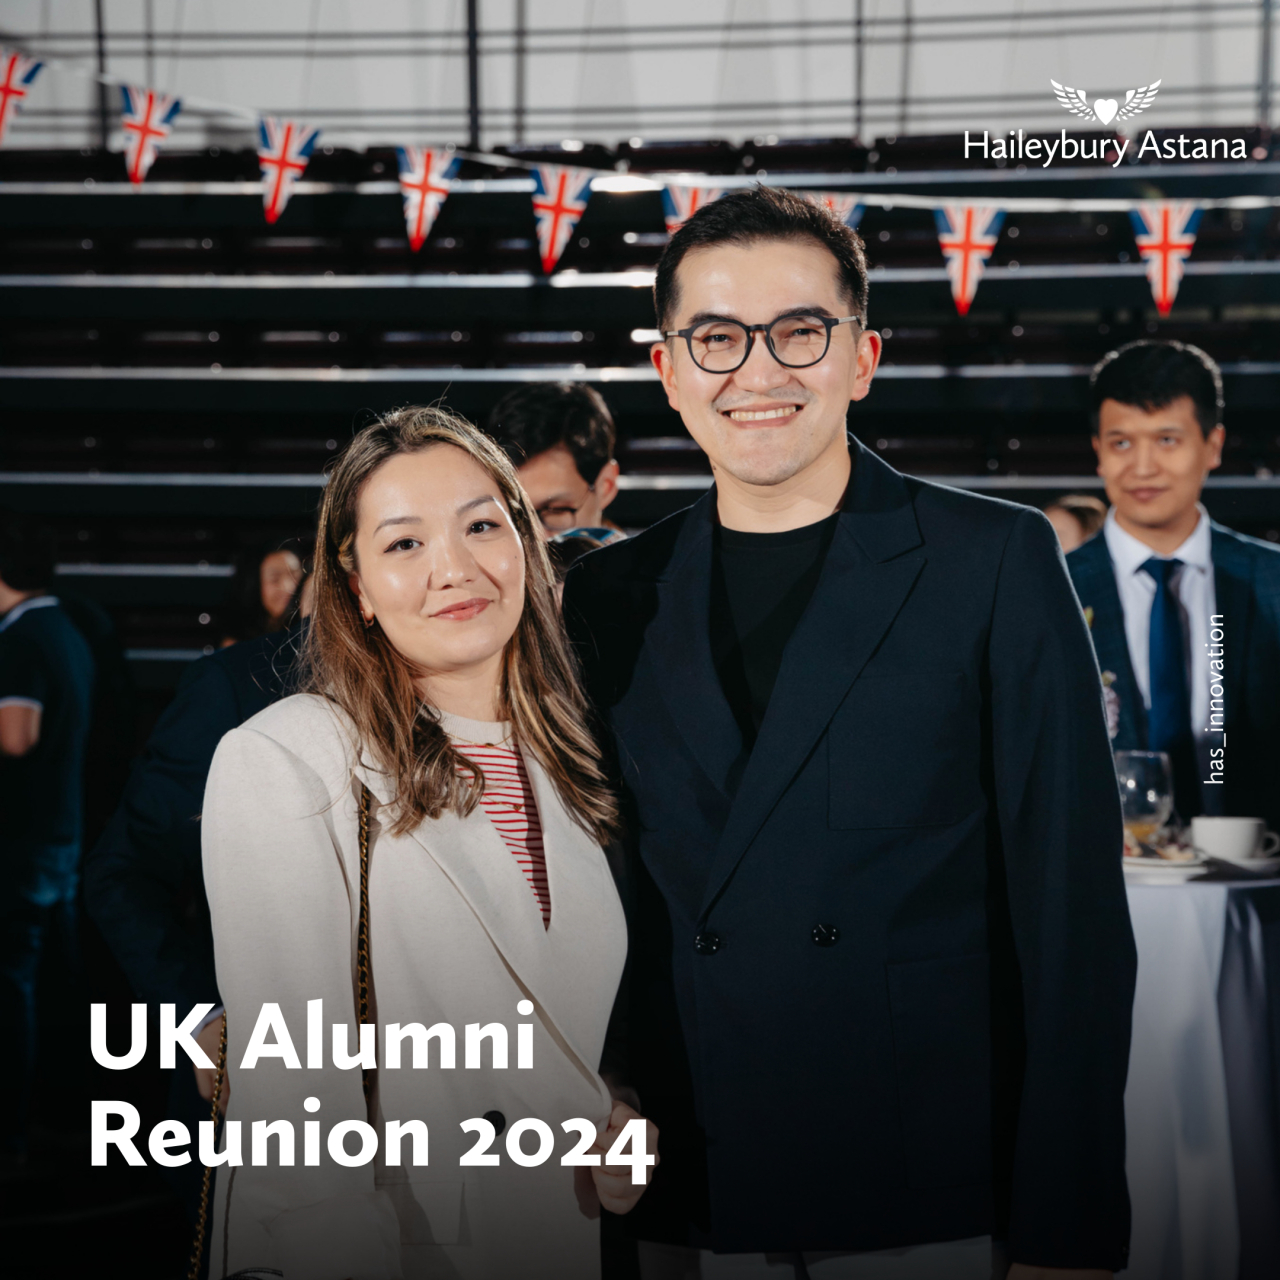 UK Alumni Reunion: An Evening of Connections!